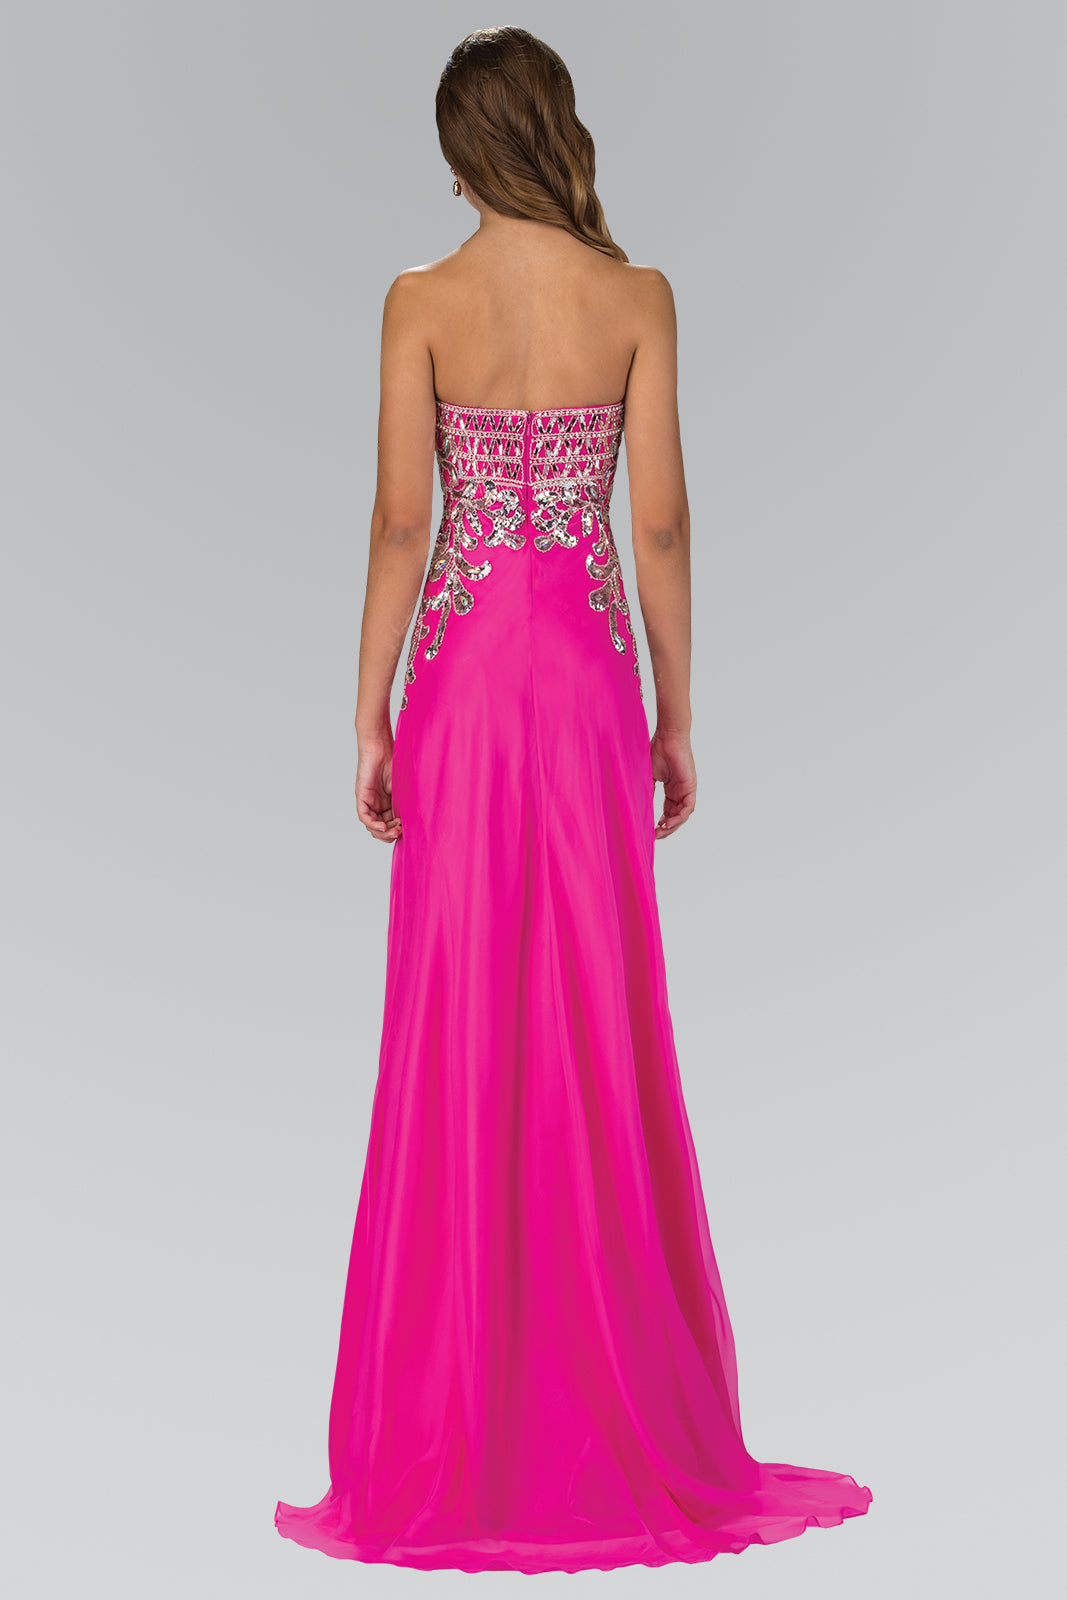 Long Prom Strapless Beaded Chiffon Formal Dress - The Dress Outlet Elizabeth K Fuchsia